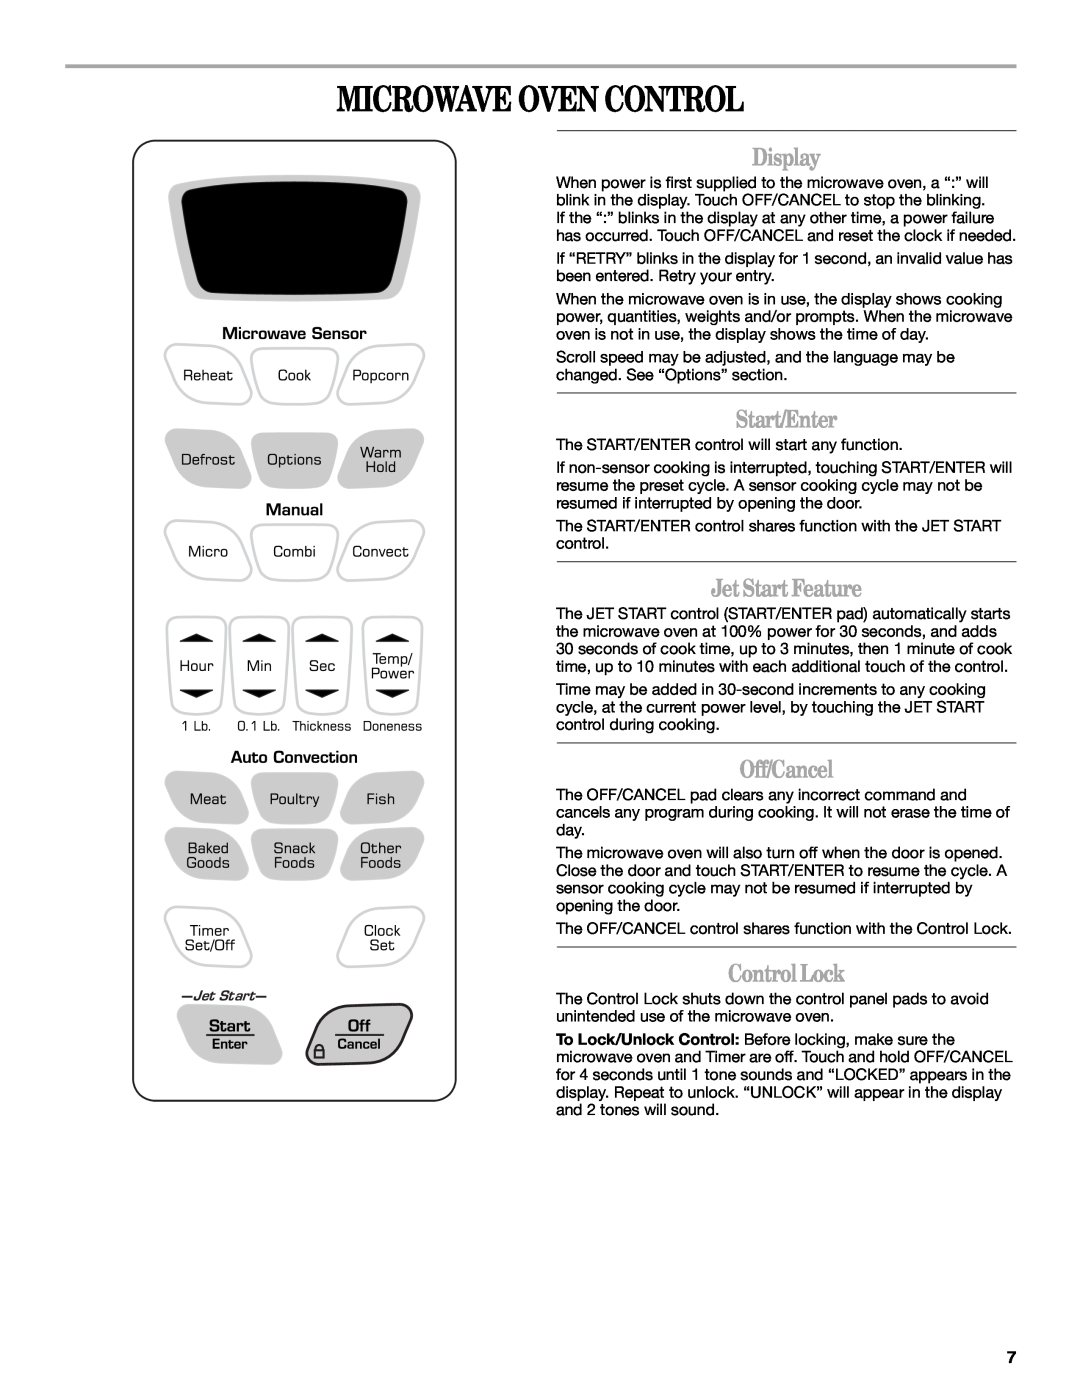 Amana AMC7159TA manual Microwave Oven Control, Display, Start/Enter, JetStartFeature, Off/Cancel, ControlLock 